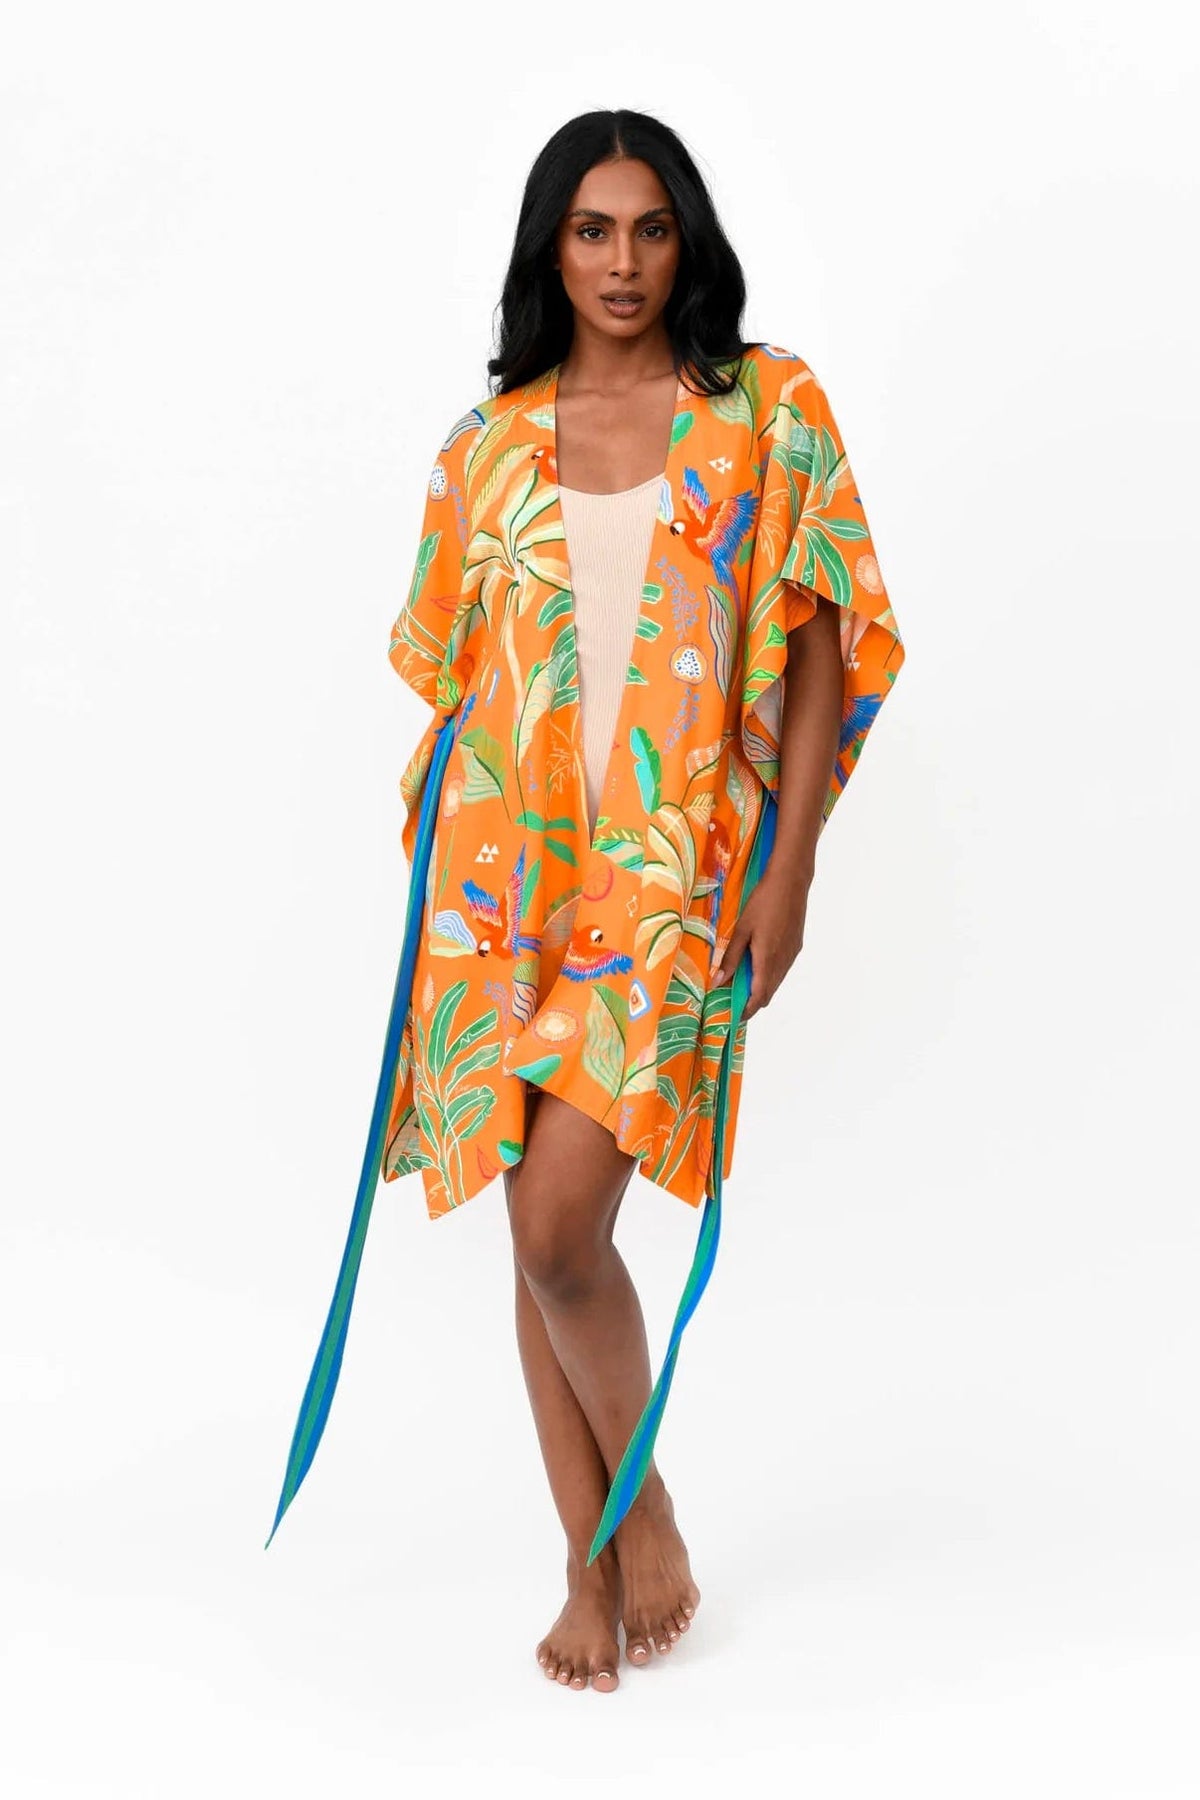 Zahlia Short Kimono in Tropical Print - Orange - Possi the Label - Splash Swimwear  - Dec22, Kaftans and Cover-Ups, Kimono, possi the label - Splash Swimwear 